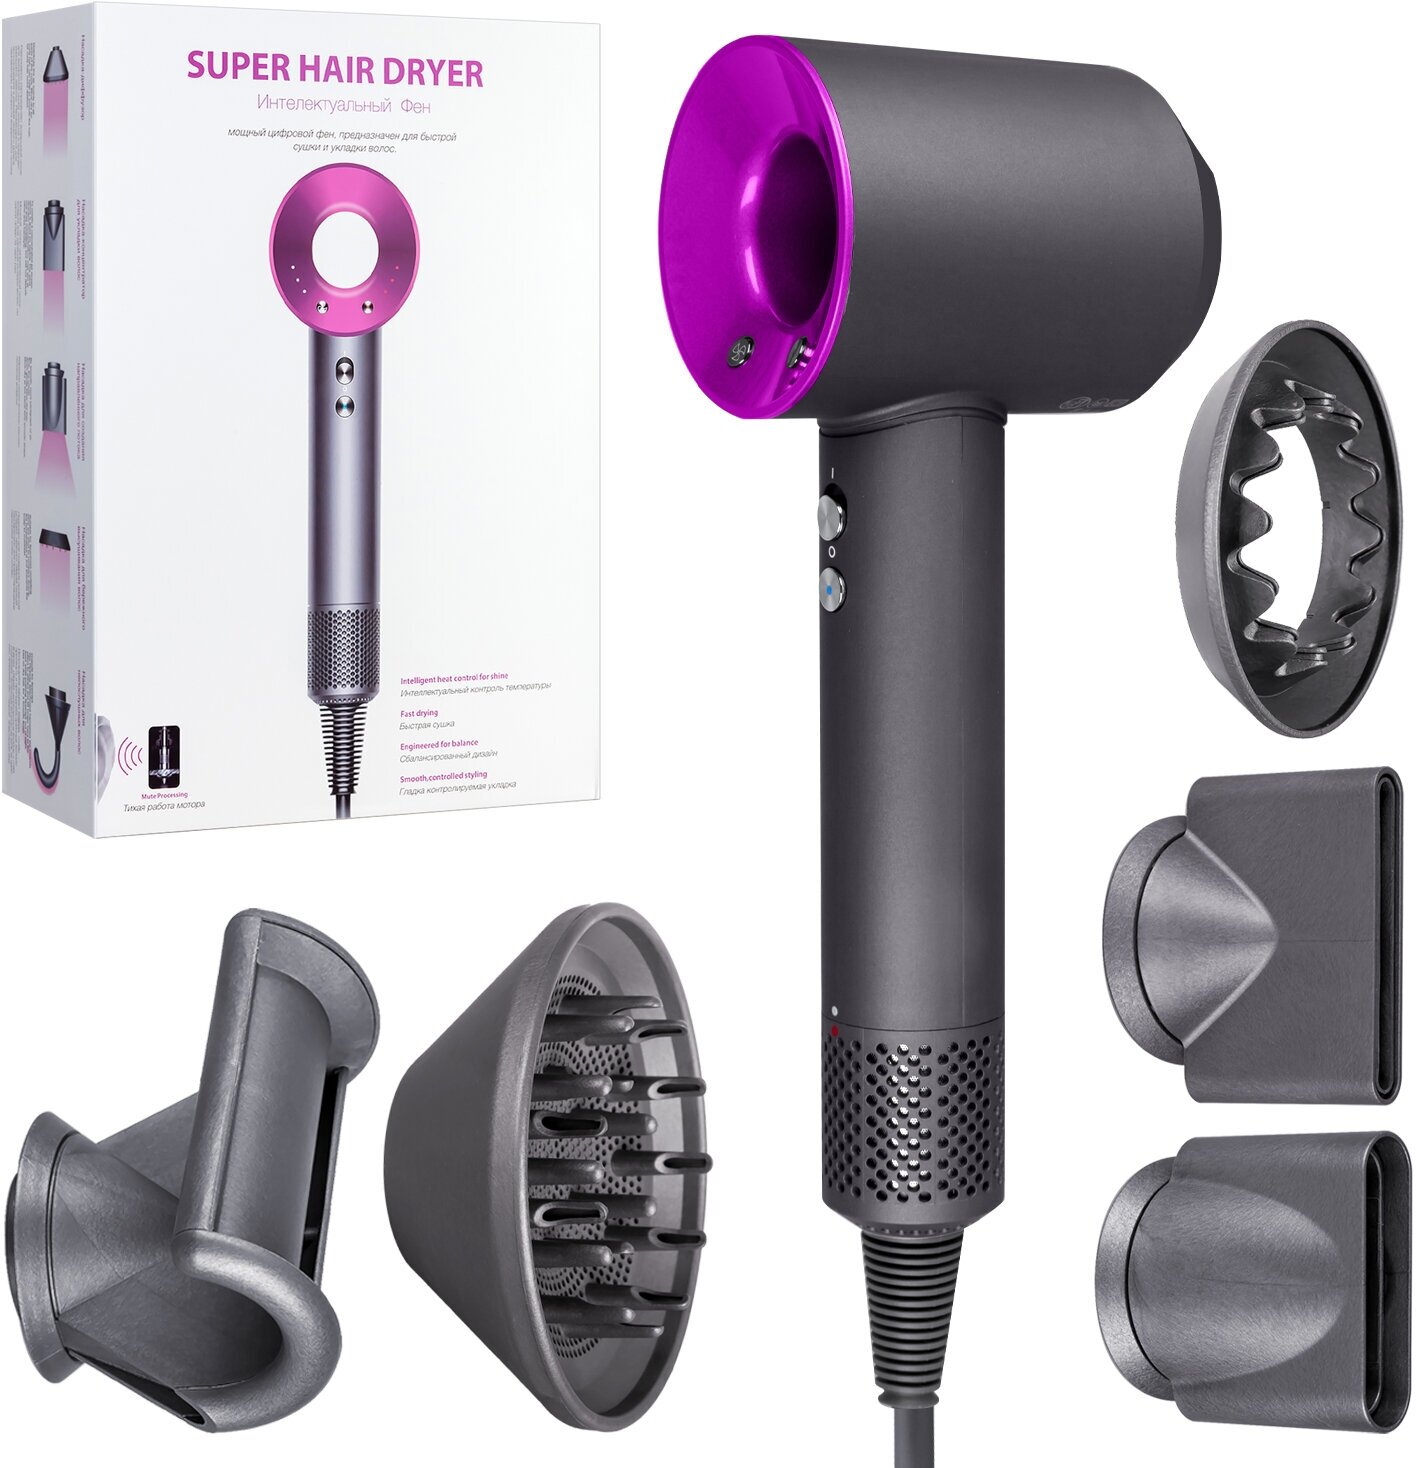 Фен набор для укладки волос Super Hair Dryer 6-in-1, 3 м, Серый с фиолетовым